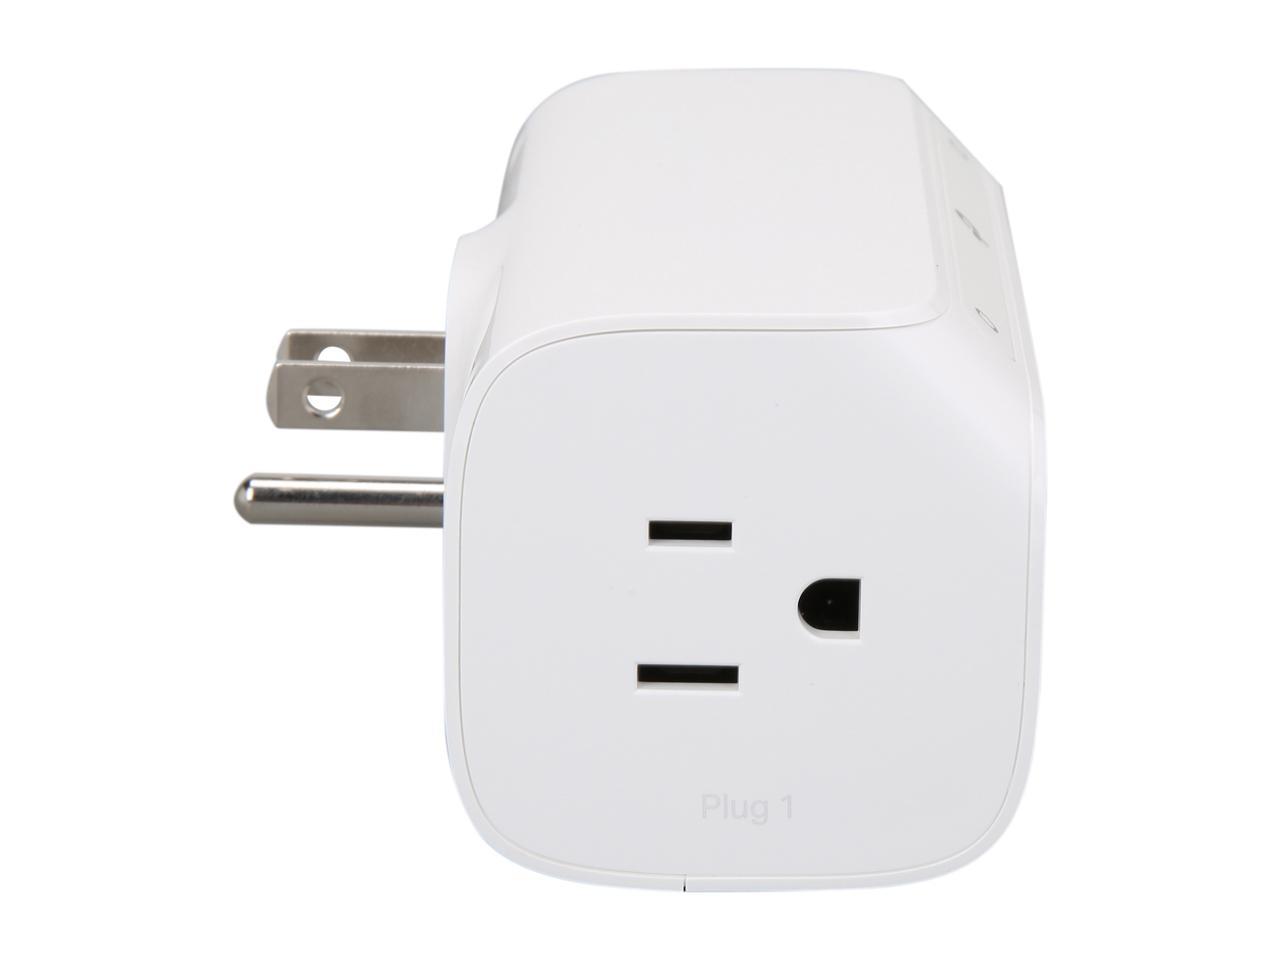 Kasa Smart Wi-Fi Plug 2-Outlet by TP-Link